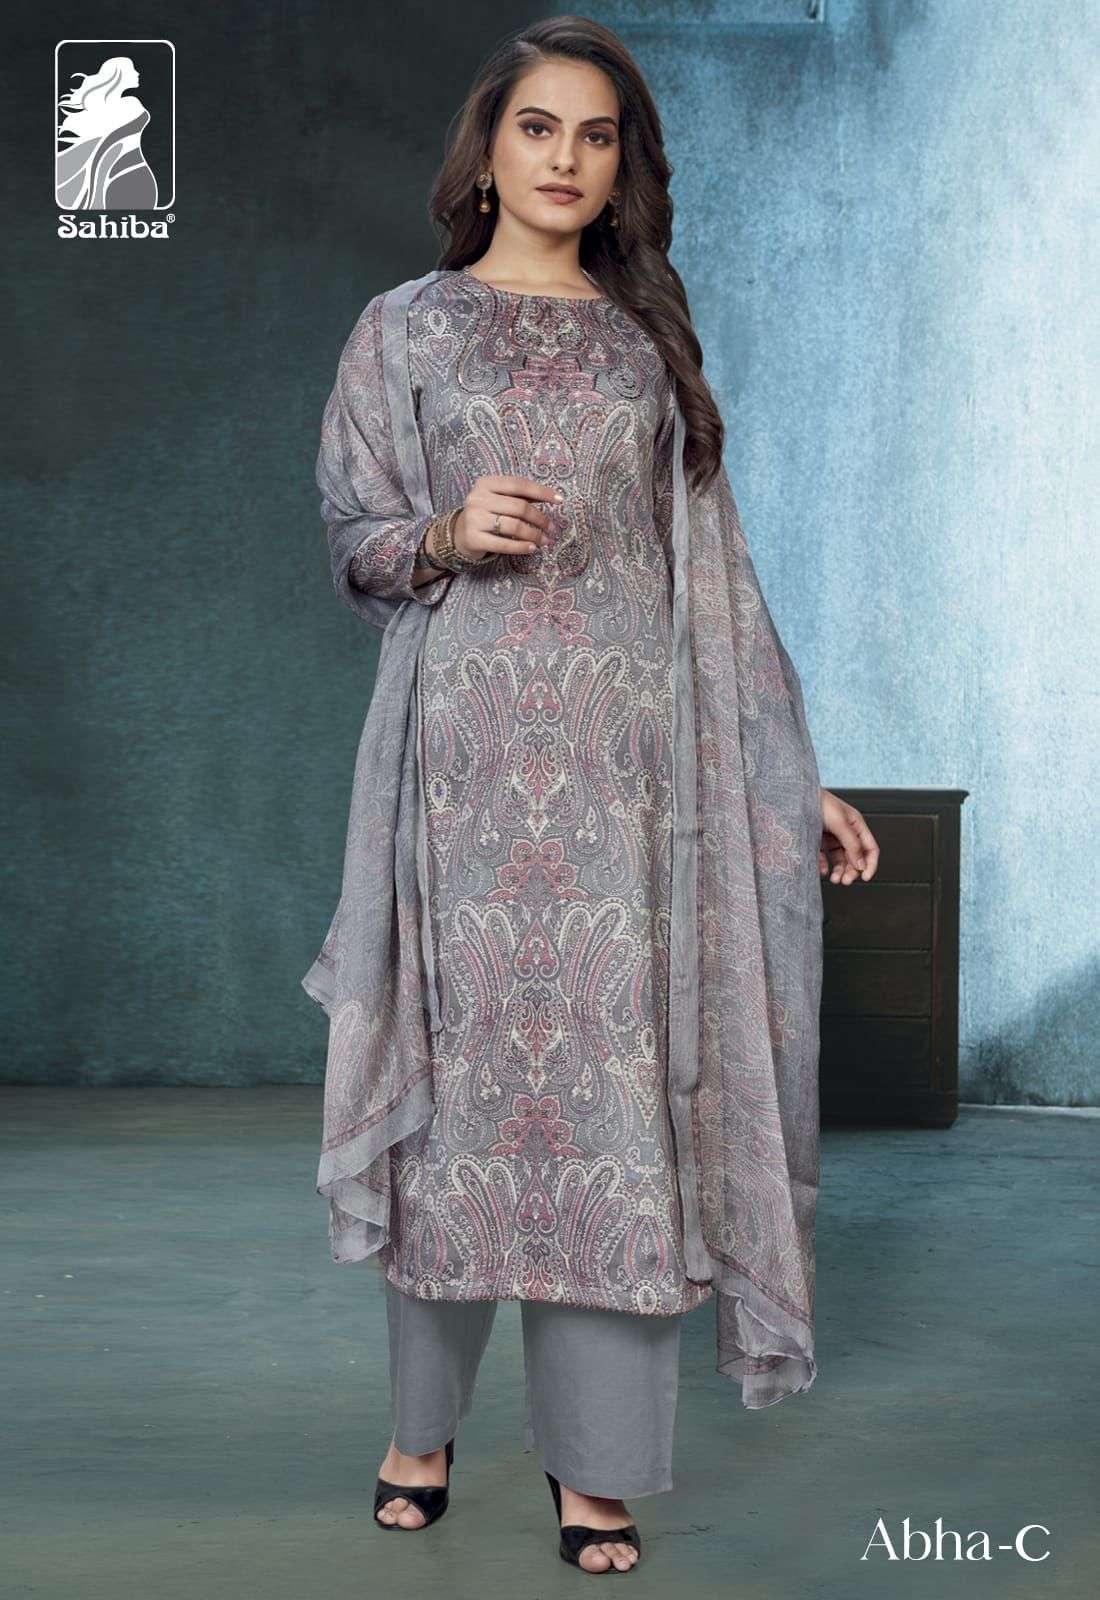 Sahiba Abha Cotton with printed Suit Collection